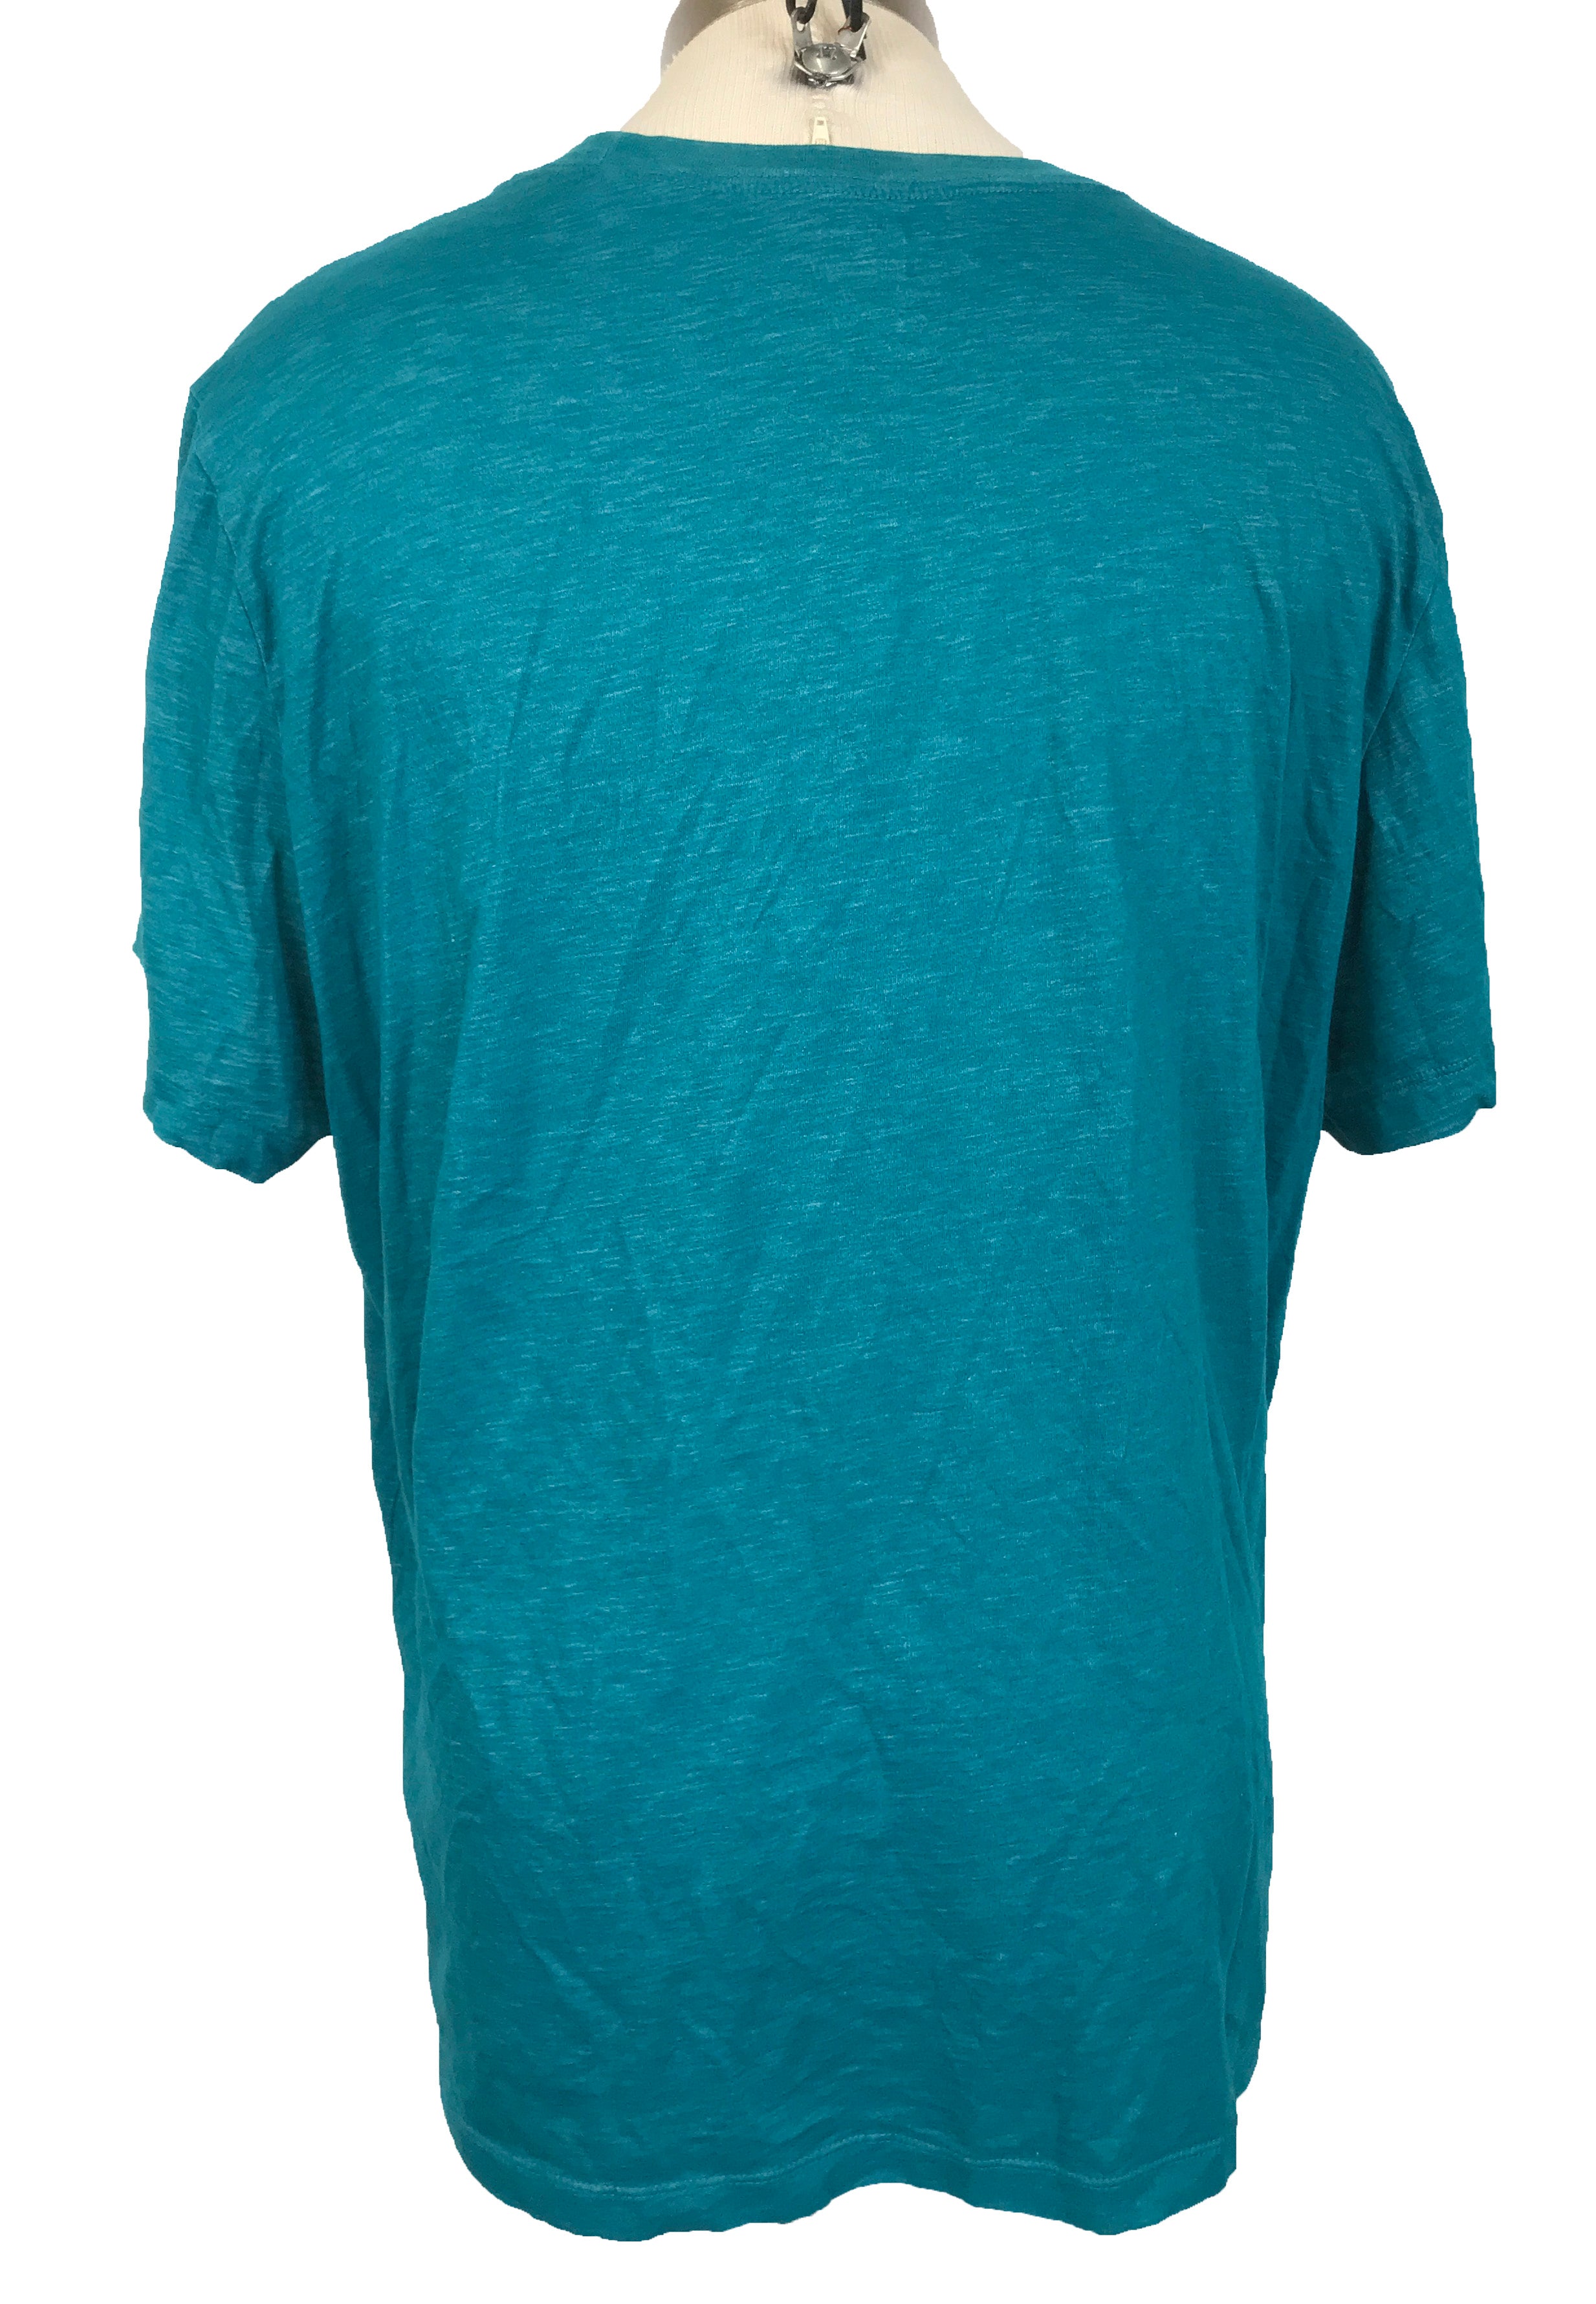 Nike Blue Dri-Fit Shirt Men's Size XXL